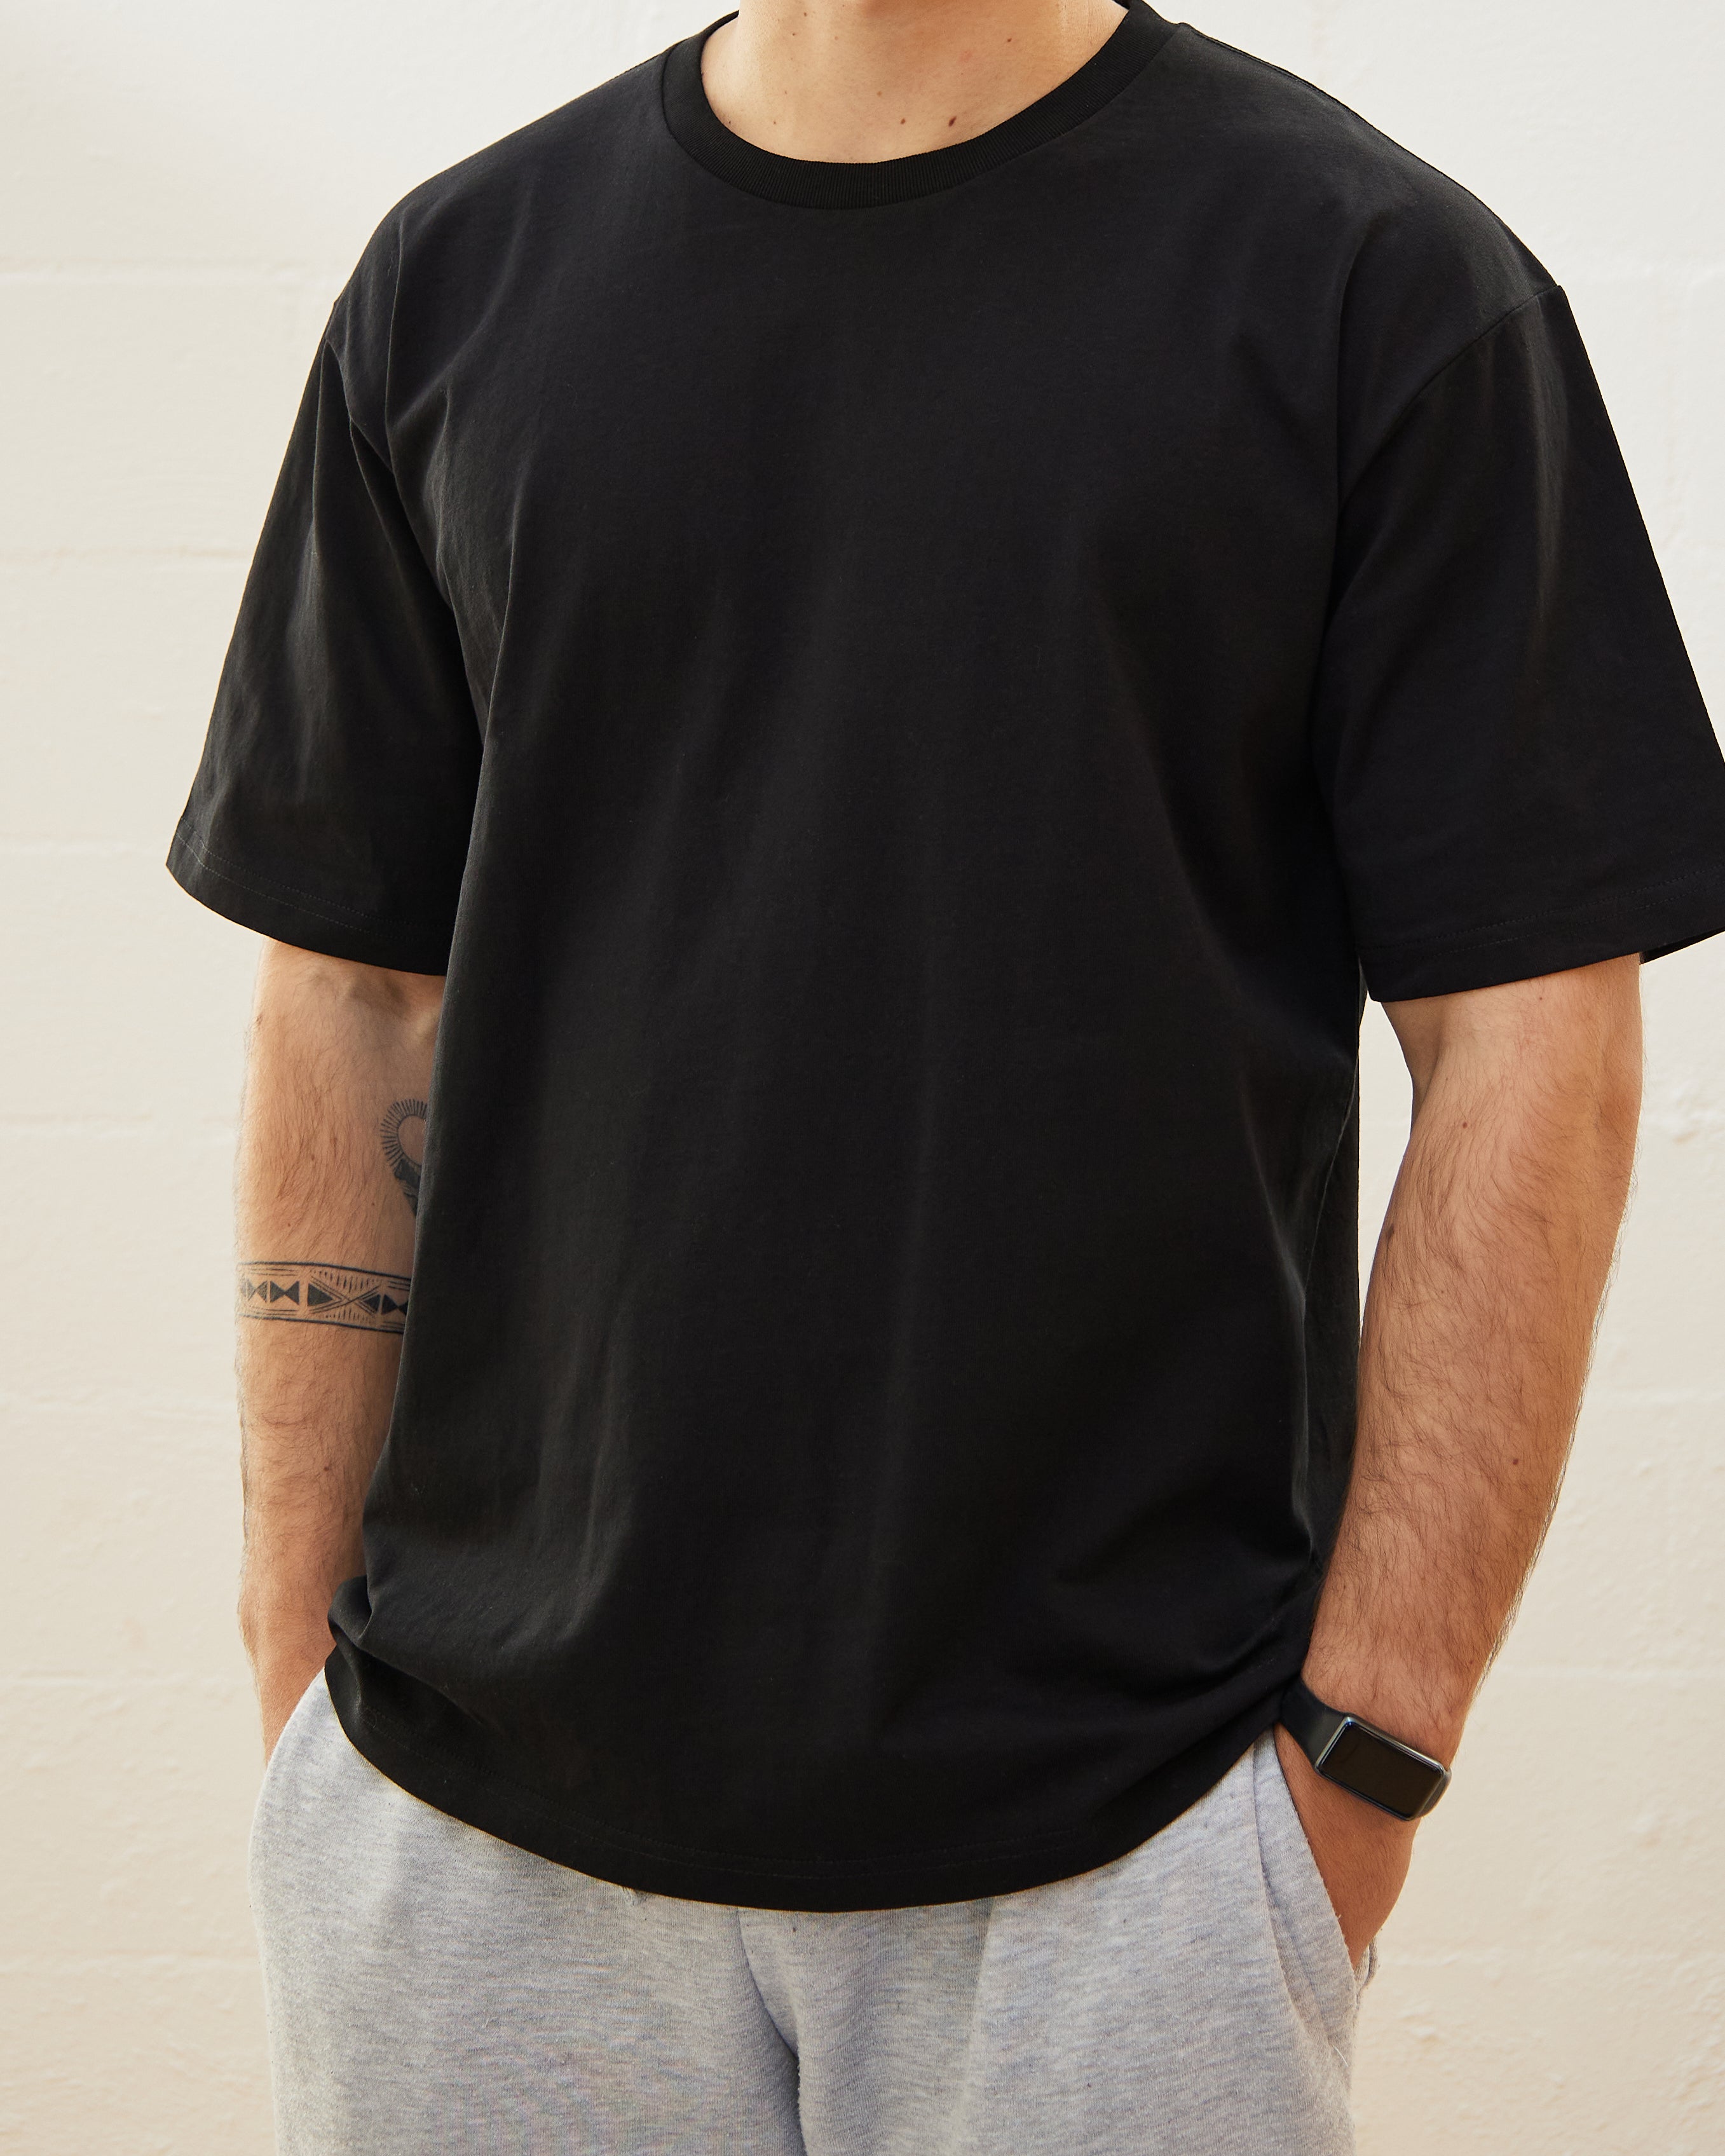 HZCX FASHION Mens Graphic Tees Bling Rhinestones Funny Tee Shirt Crew Neck  Short Sleeve Novelty T-shirts Black White True Classical Skull Shirts(942  BLACK,M) 